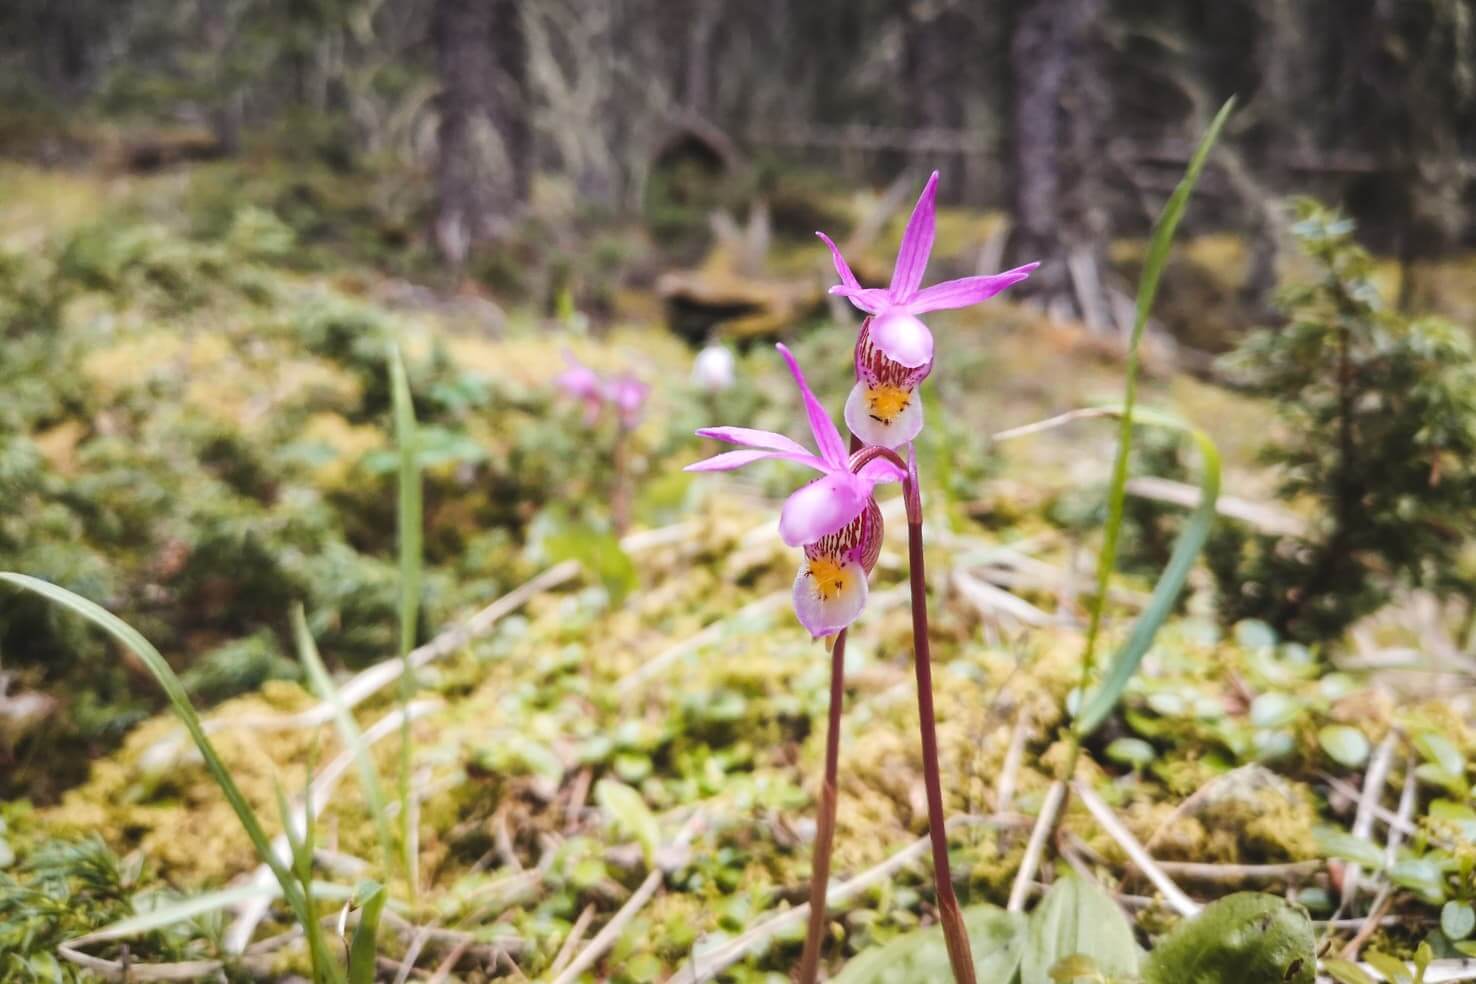 Glacier Lake, Banff National Park - Calypso orchids